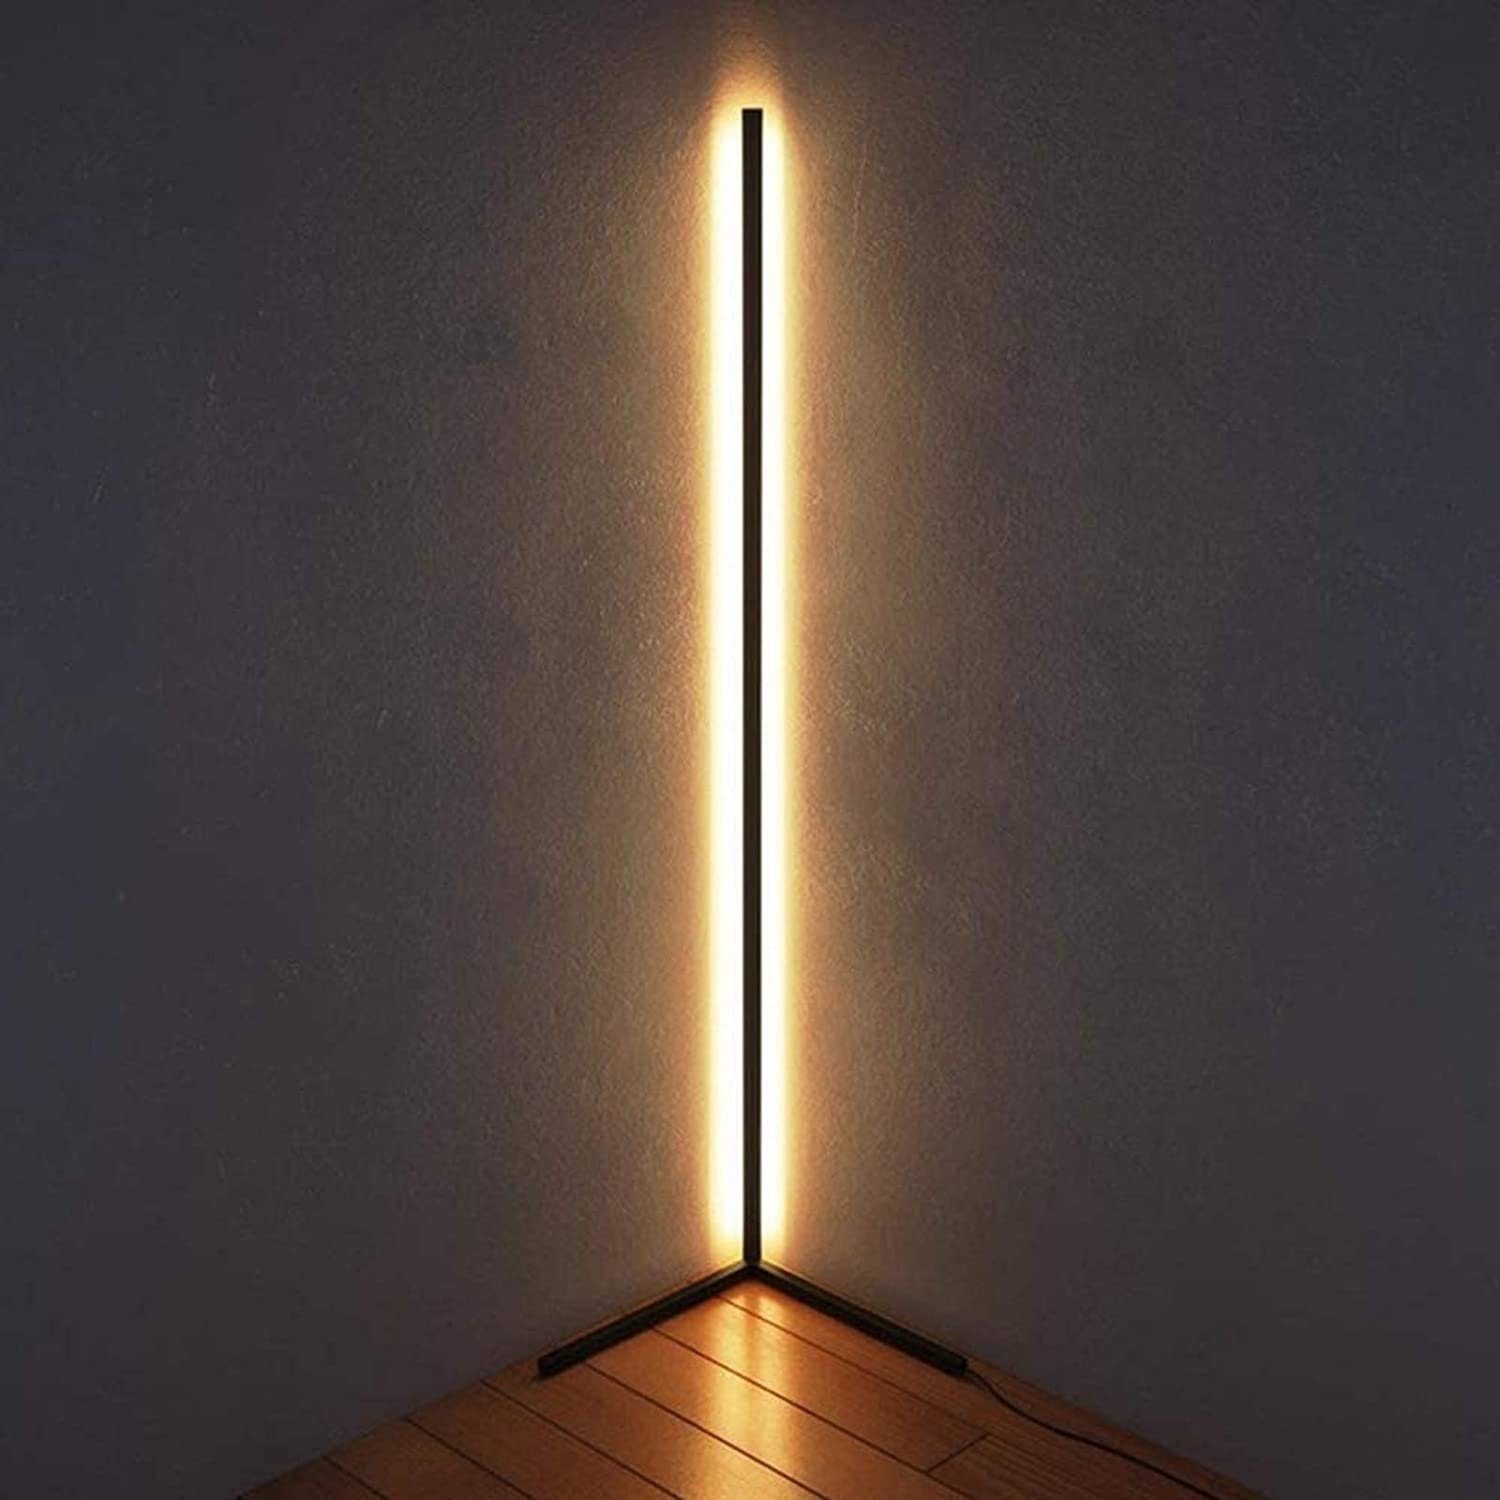 Jiuanzm LED Stehlampe »Ecklampe«, LED fest integriert, warmweiß (3500k),  indirekts LED Lampe, 3500 k Warmweiß